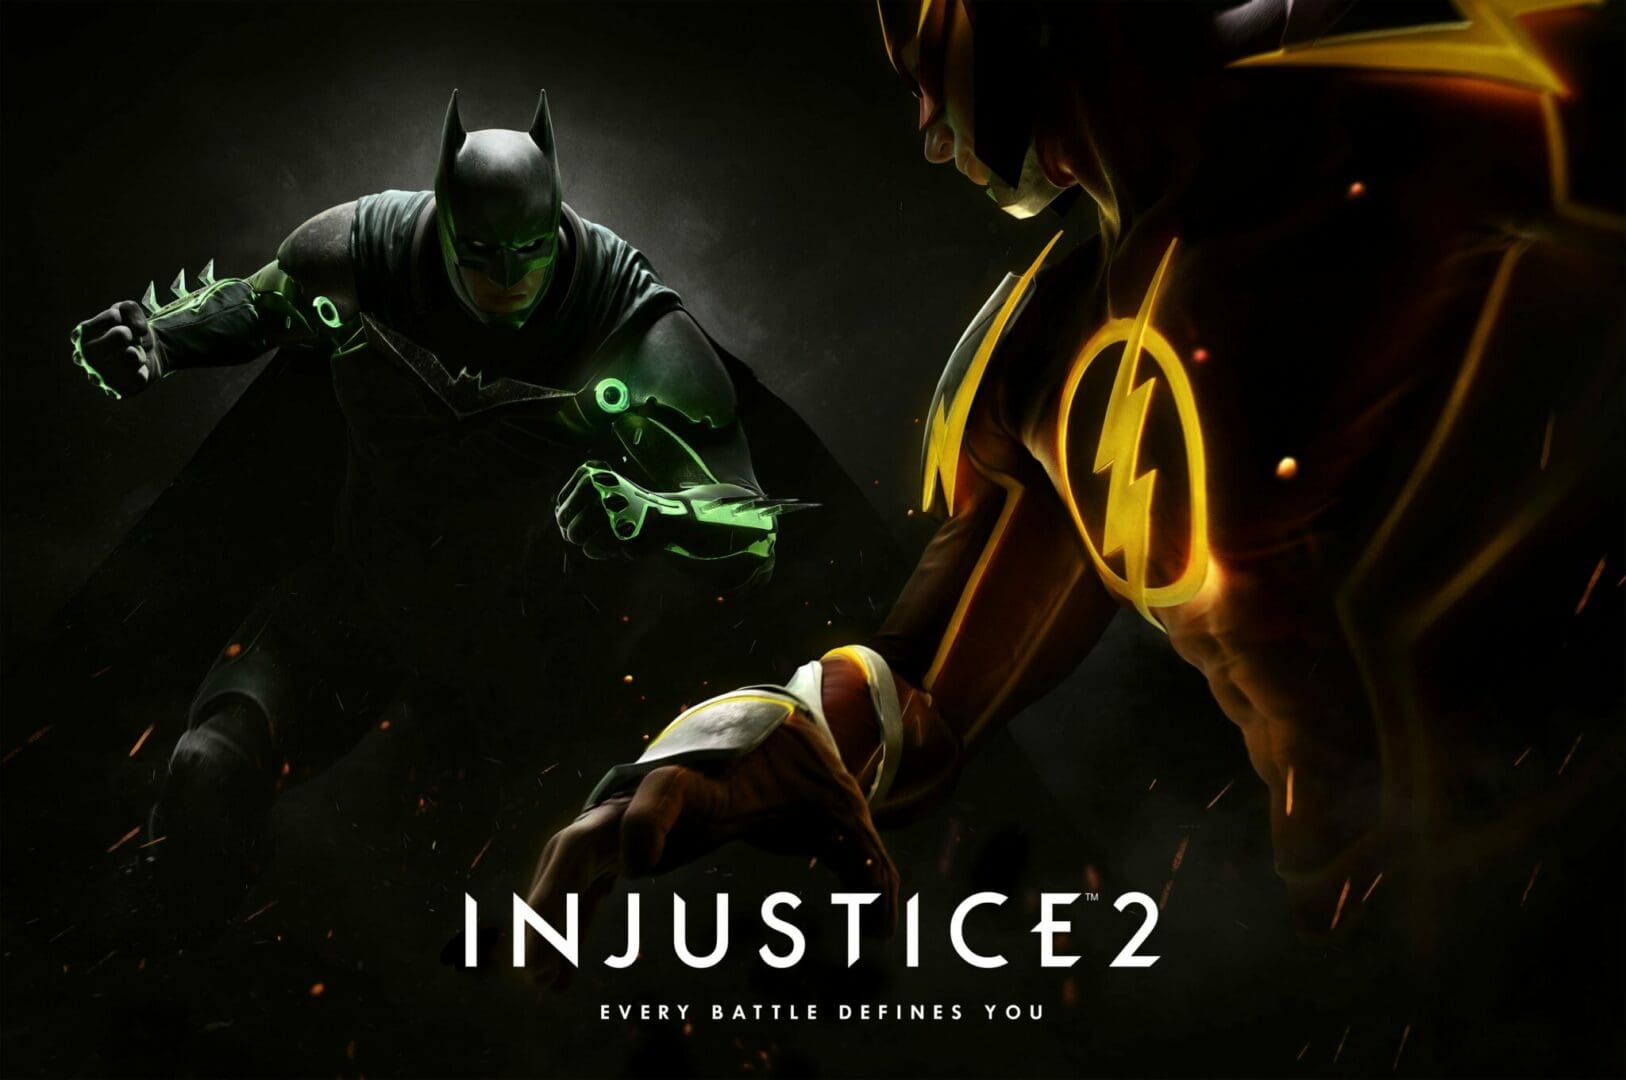 Injustice 2 Gameplay Revealed